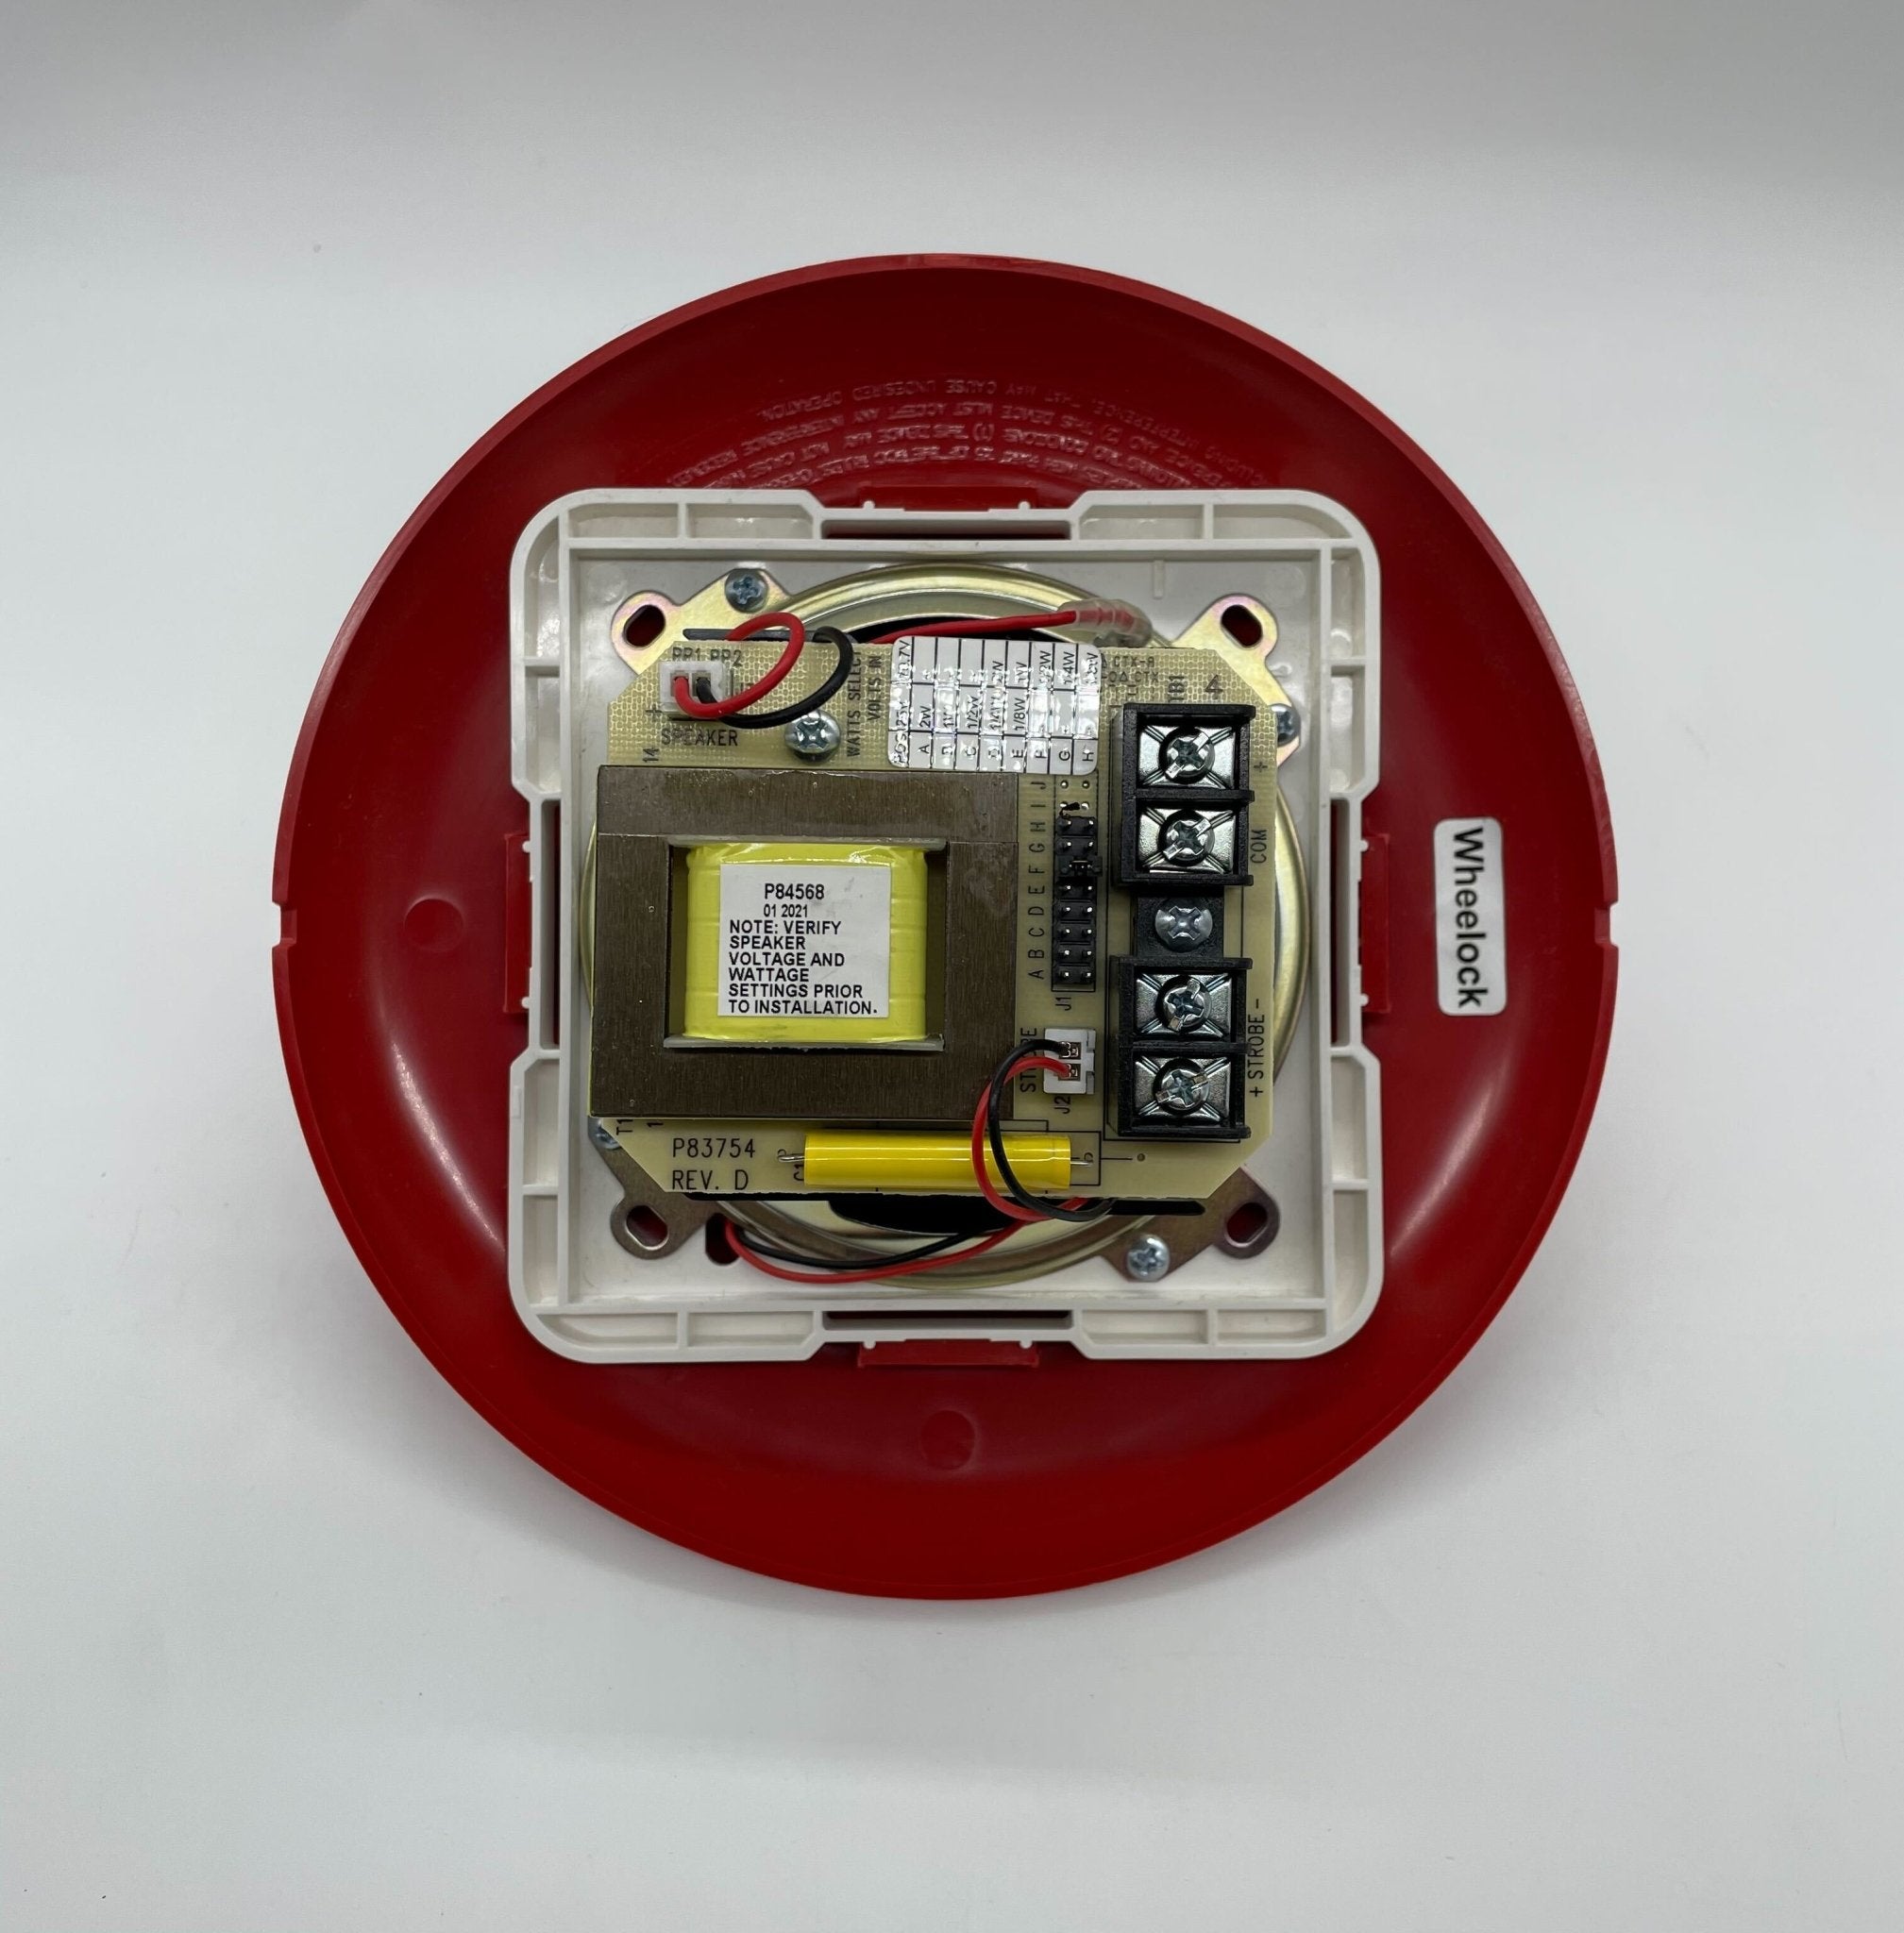 Wheelock E60H-24MCC-FR - The Fire Alarm Supplier